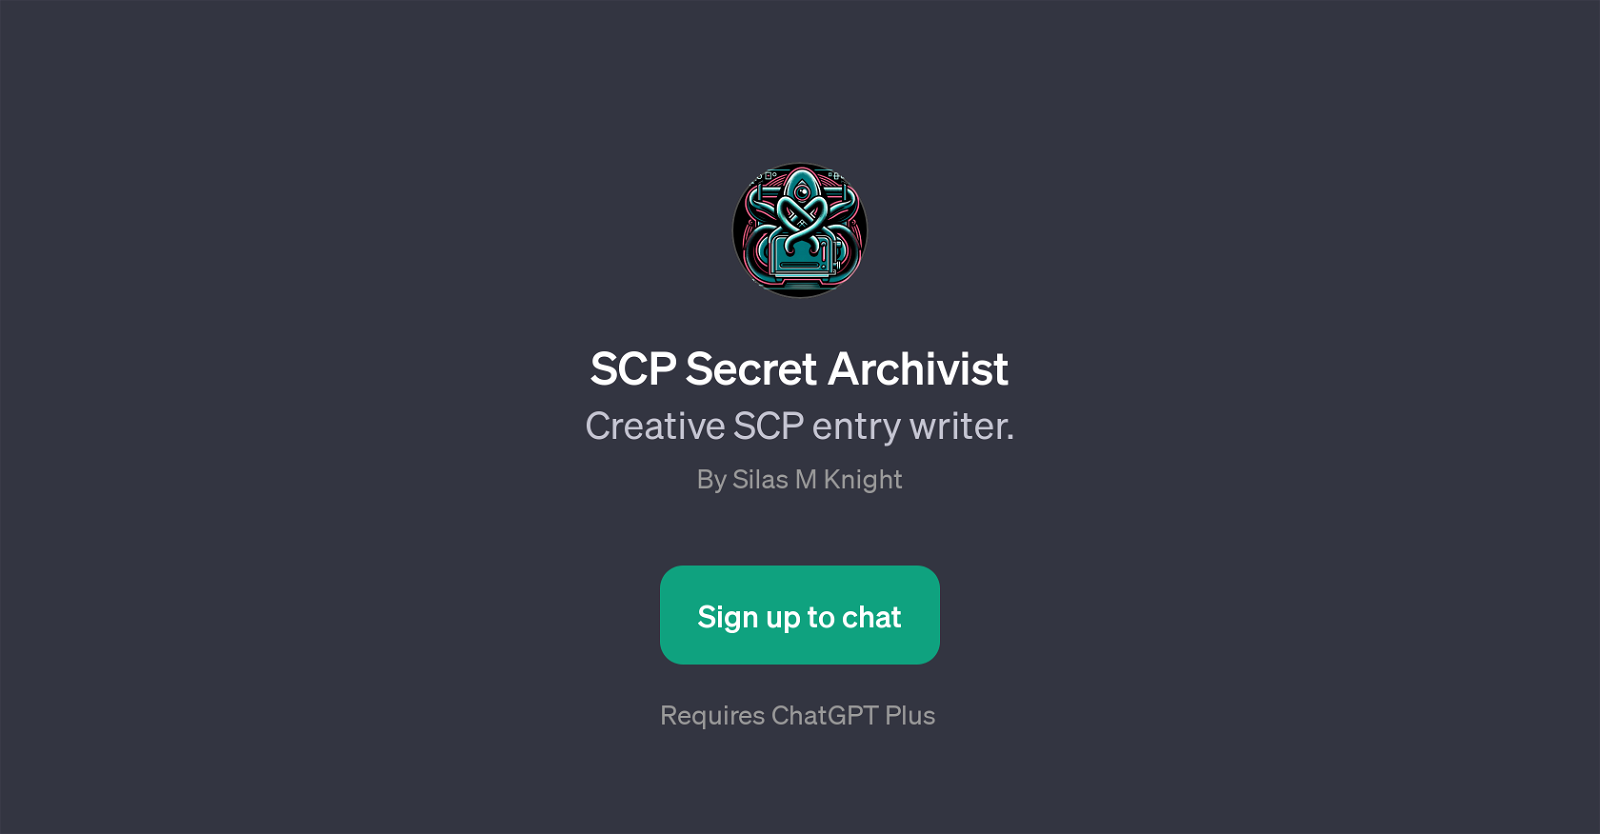 SCP Secret Archivist website